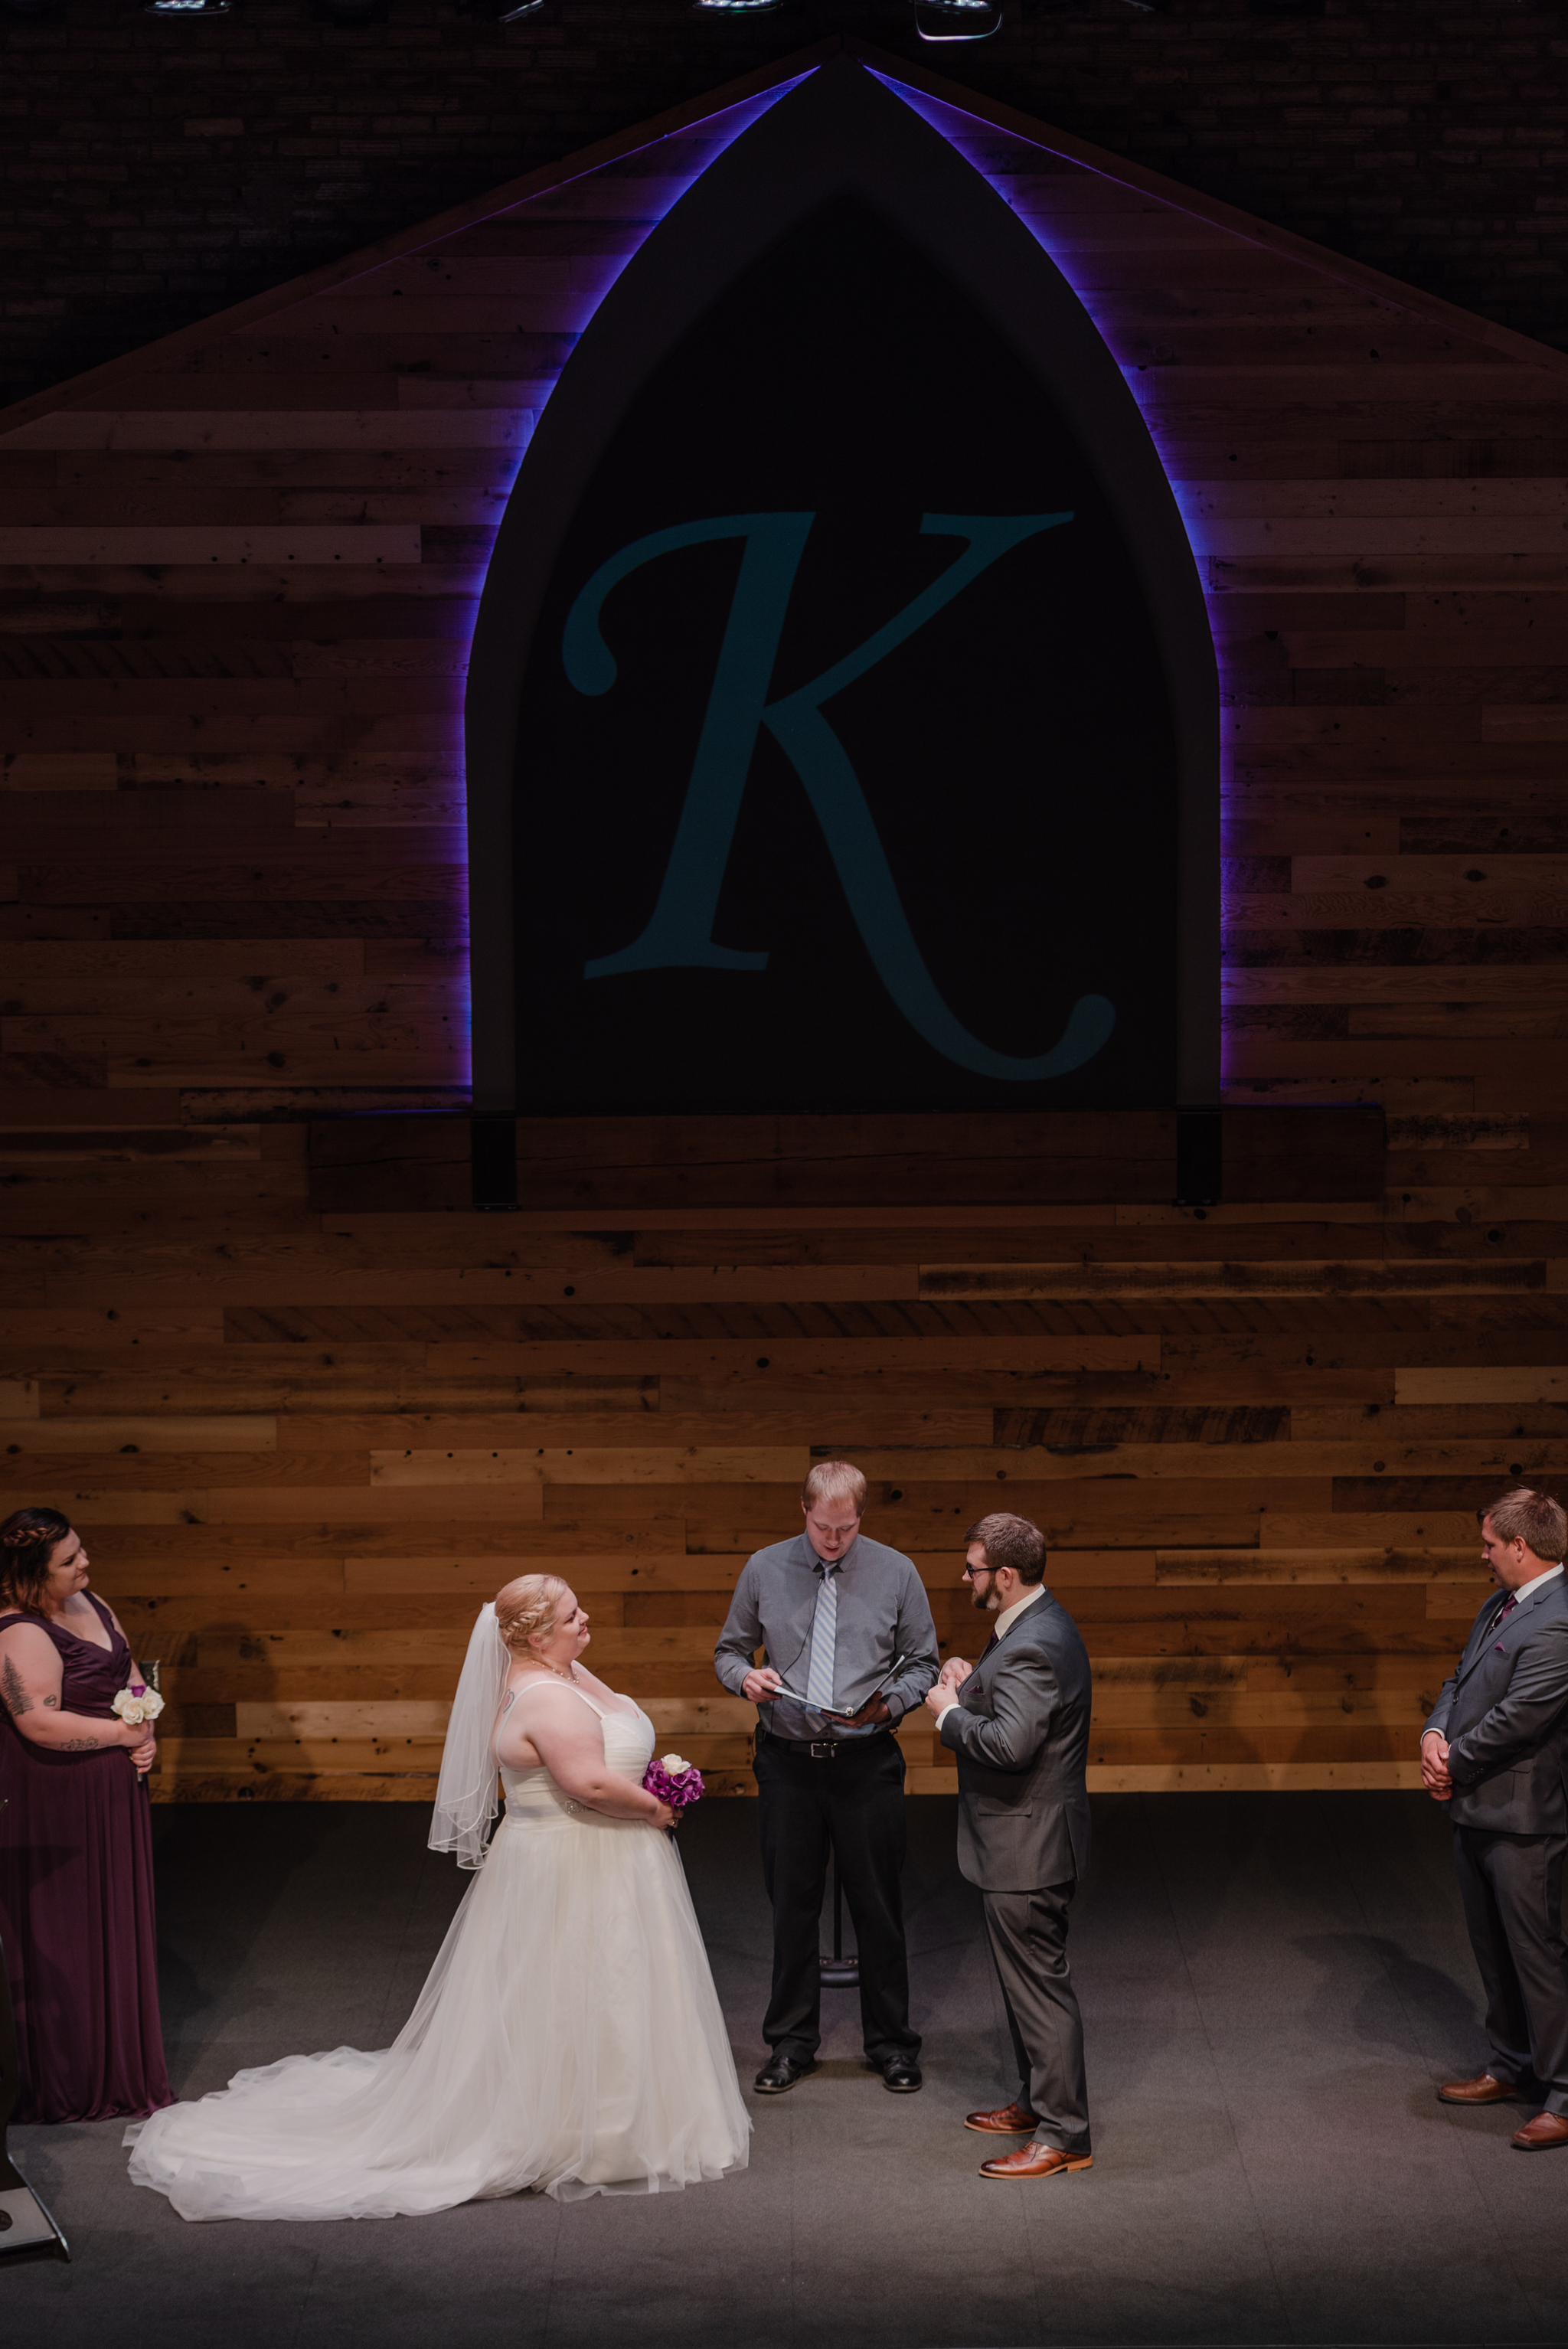 Sanctuary Events Center Wedding by Chelsea Joy Photography | Fargo, ND Wedding Photography